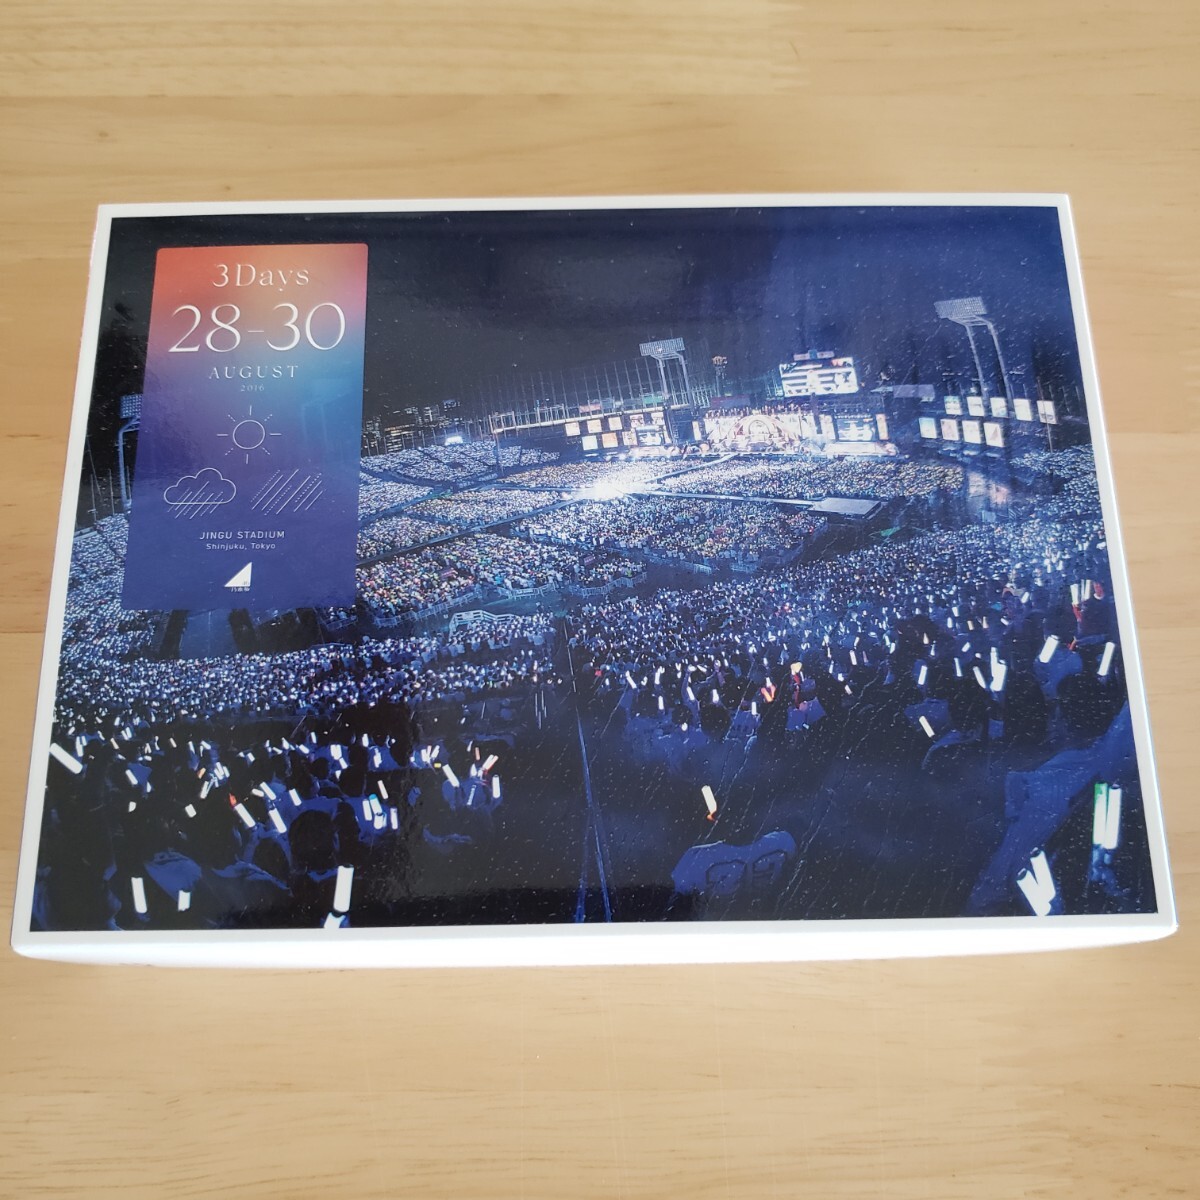 【Disc3無し】乃木坂46 DVD 4th YEAR BIRTHDAY LIVE 2016.8.28-30 JINGU STADIUM(完全生産限定版)_画像1